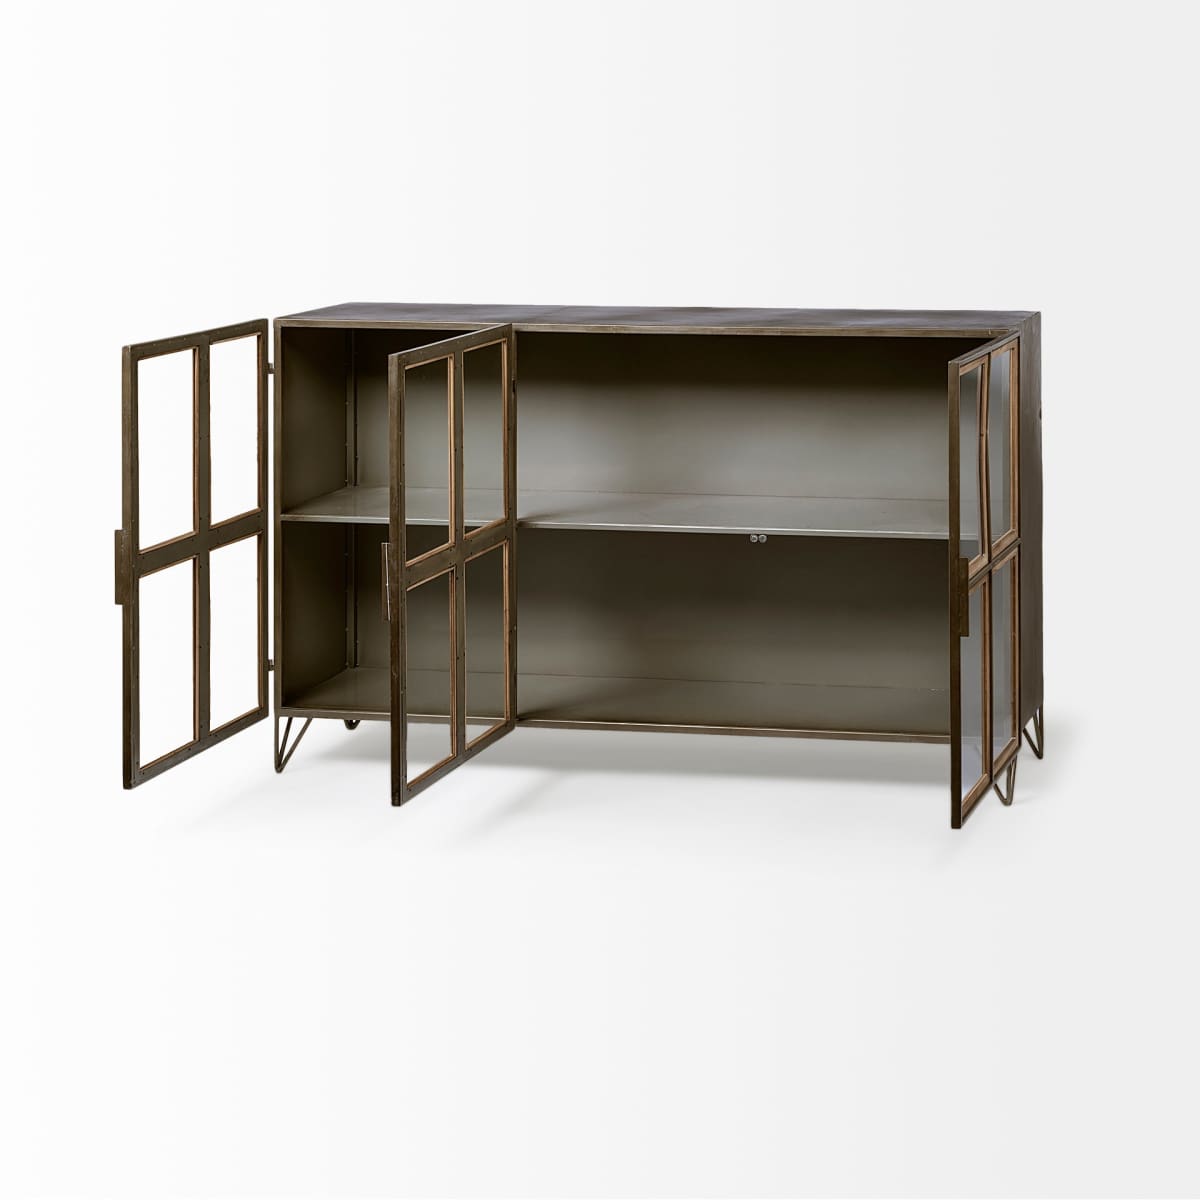 Pandora Horizontal Cabinet Brown Wood | Gray Metal | 66L - cabinets